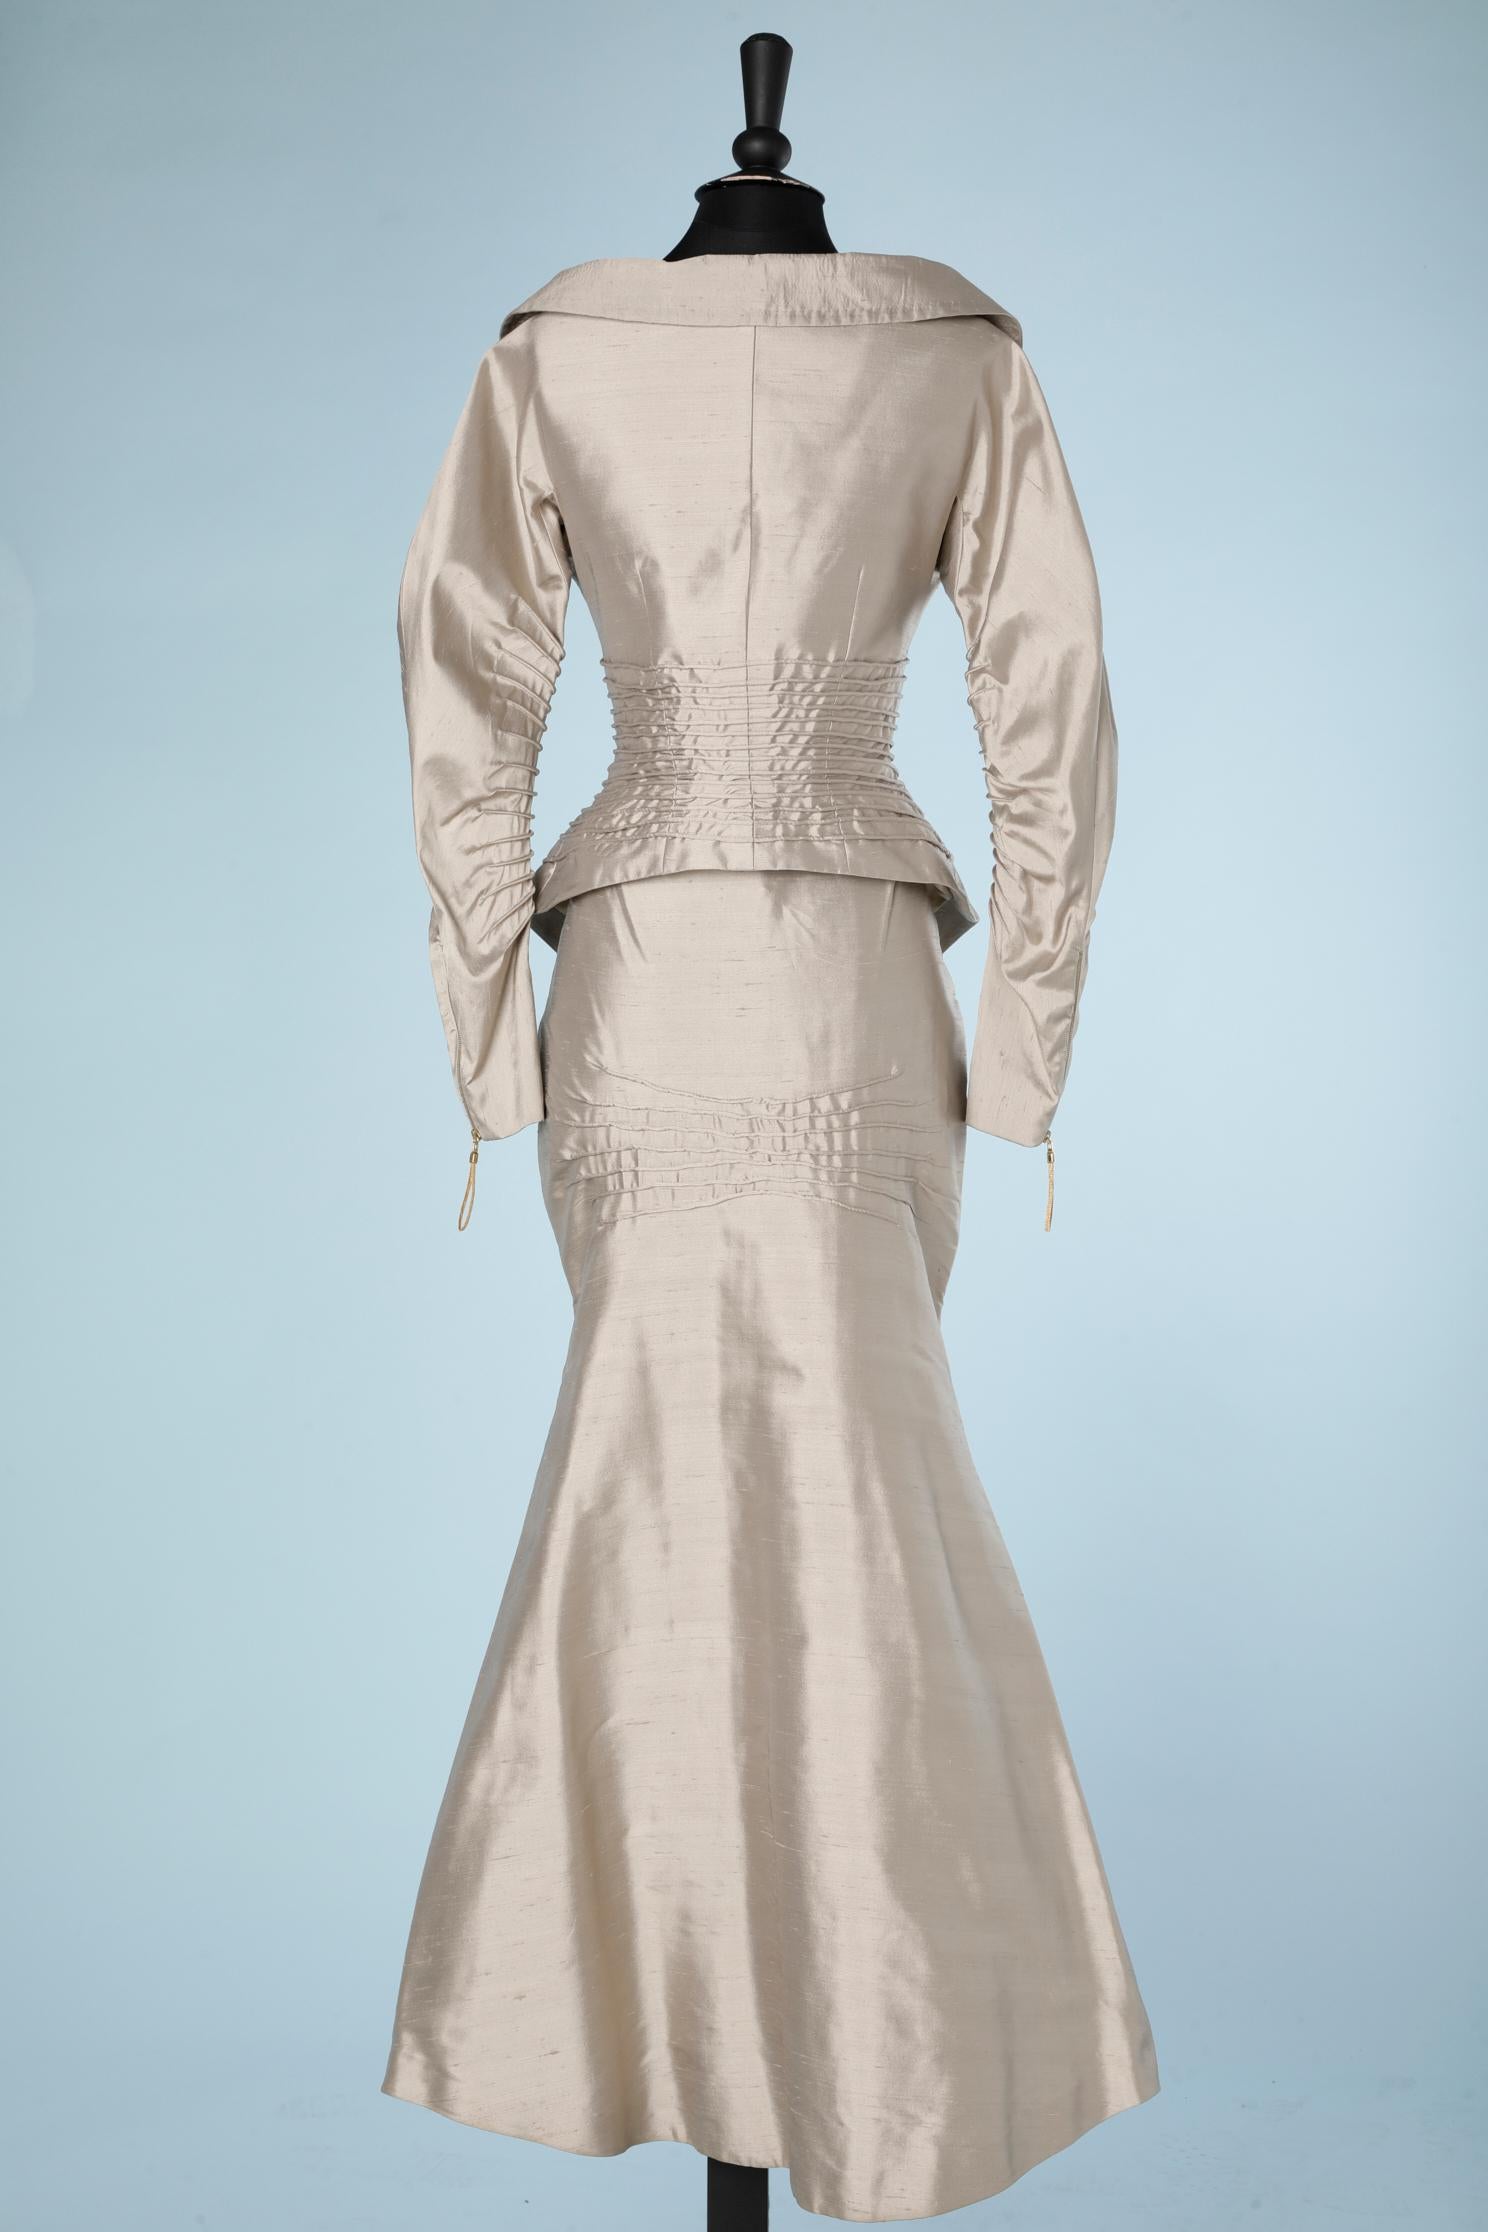 Pale grey silk evening skirt-suit Gianfranco Ferré  For Sale 2